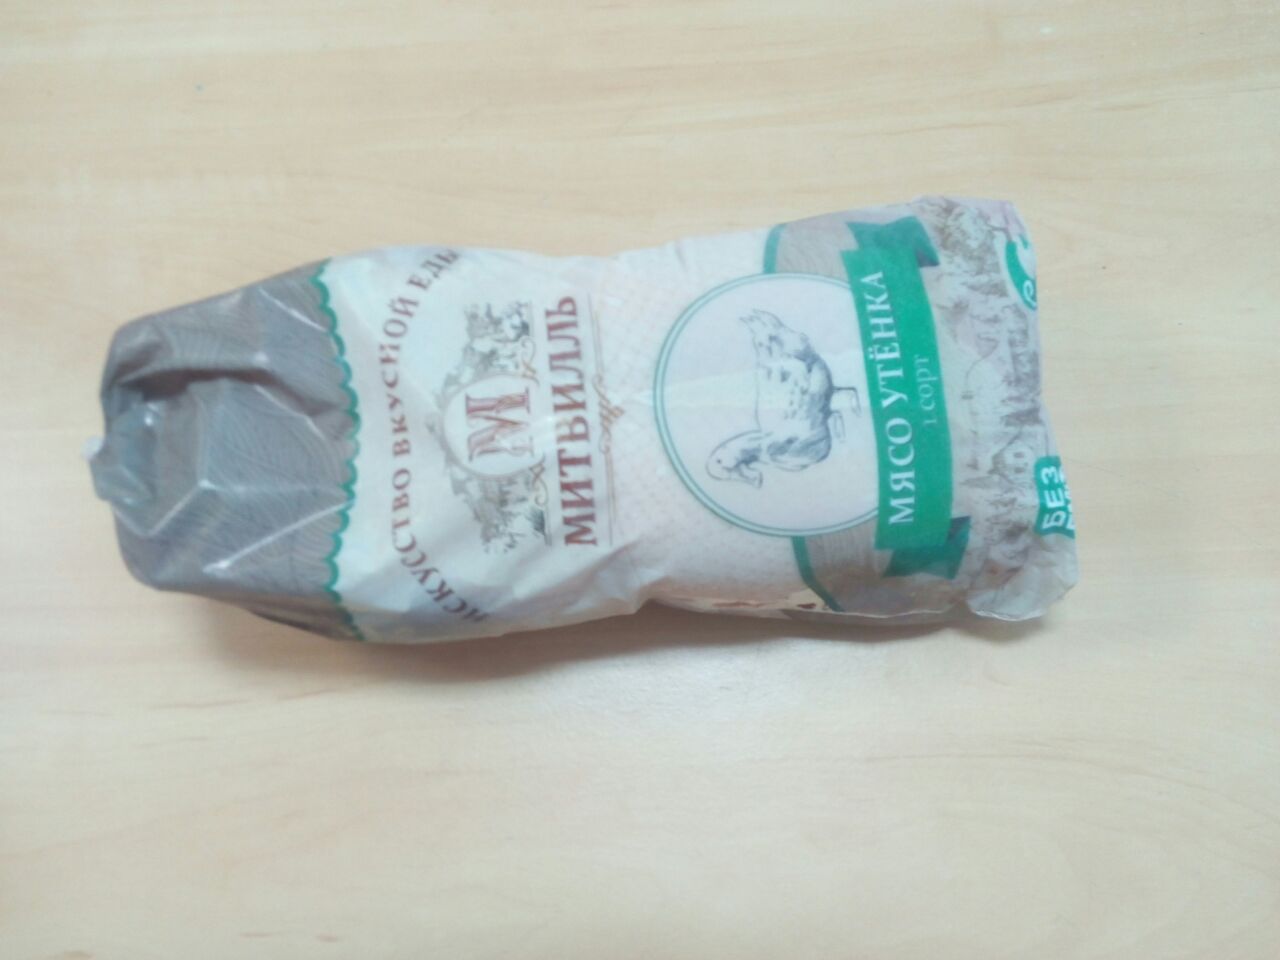 Предлагаем утку-тушка (заморозка) от производителя в Краснодарском крае